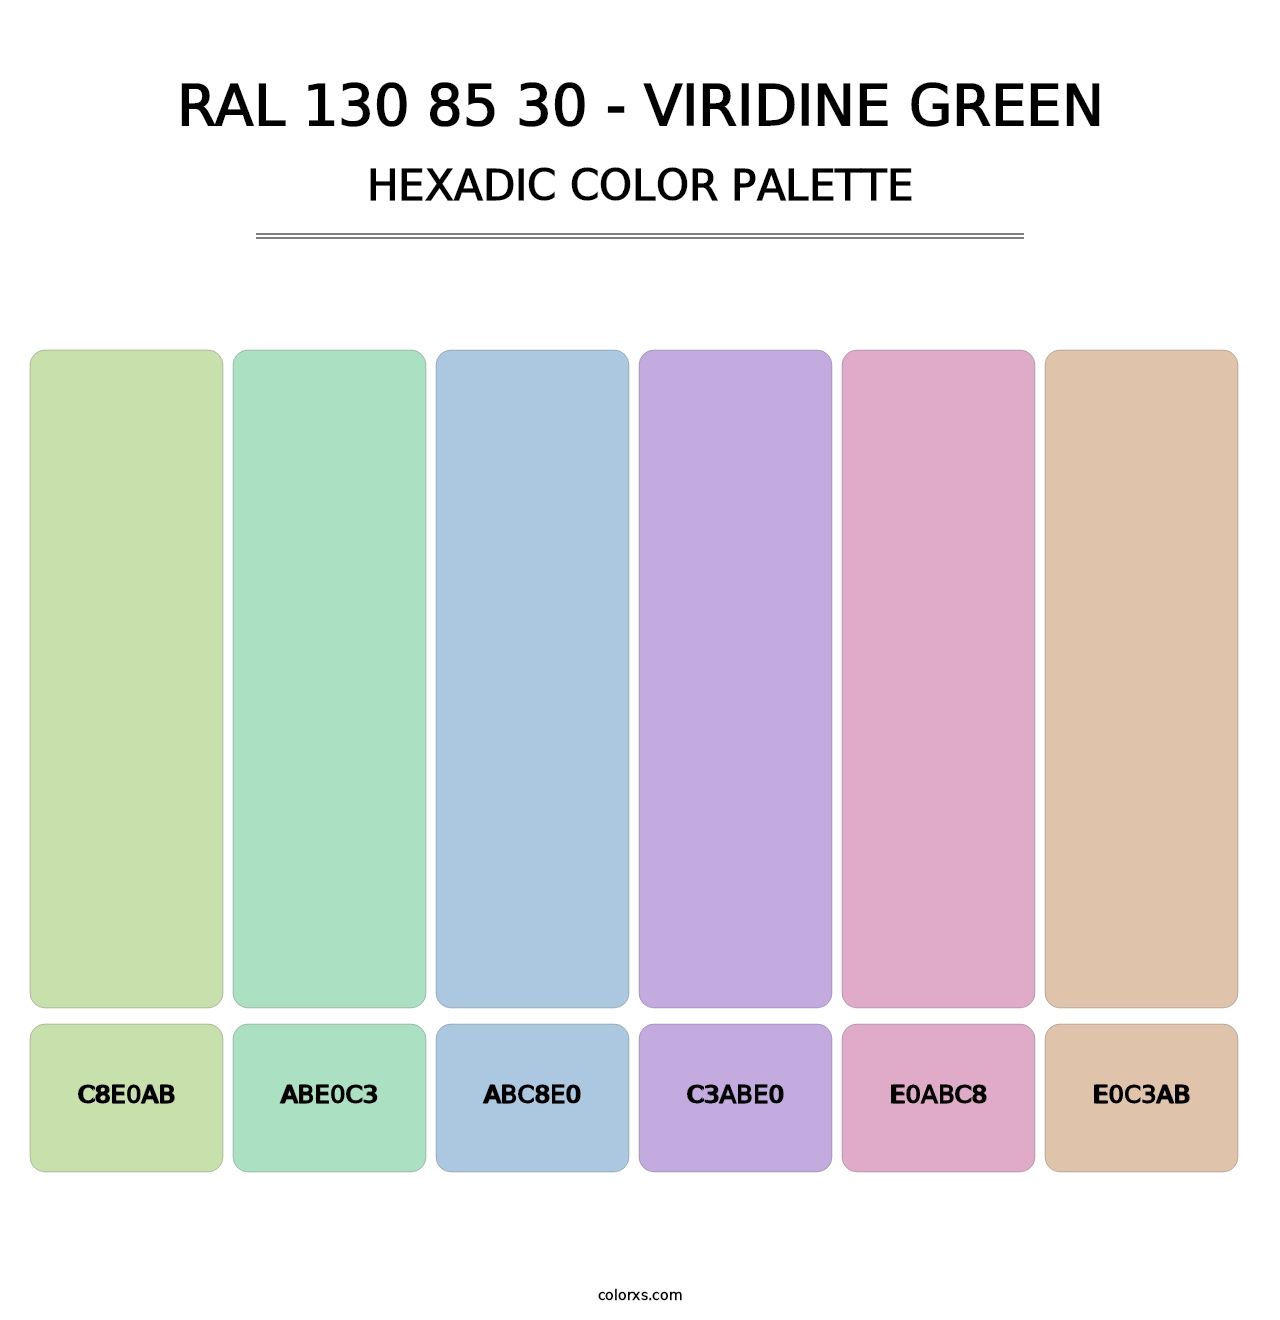 RAL 130 85 30 - Viridine Green - Hexadic Color Palette